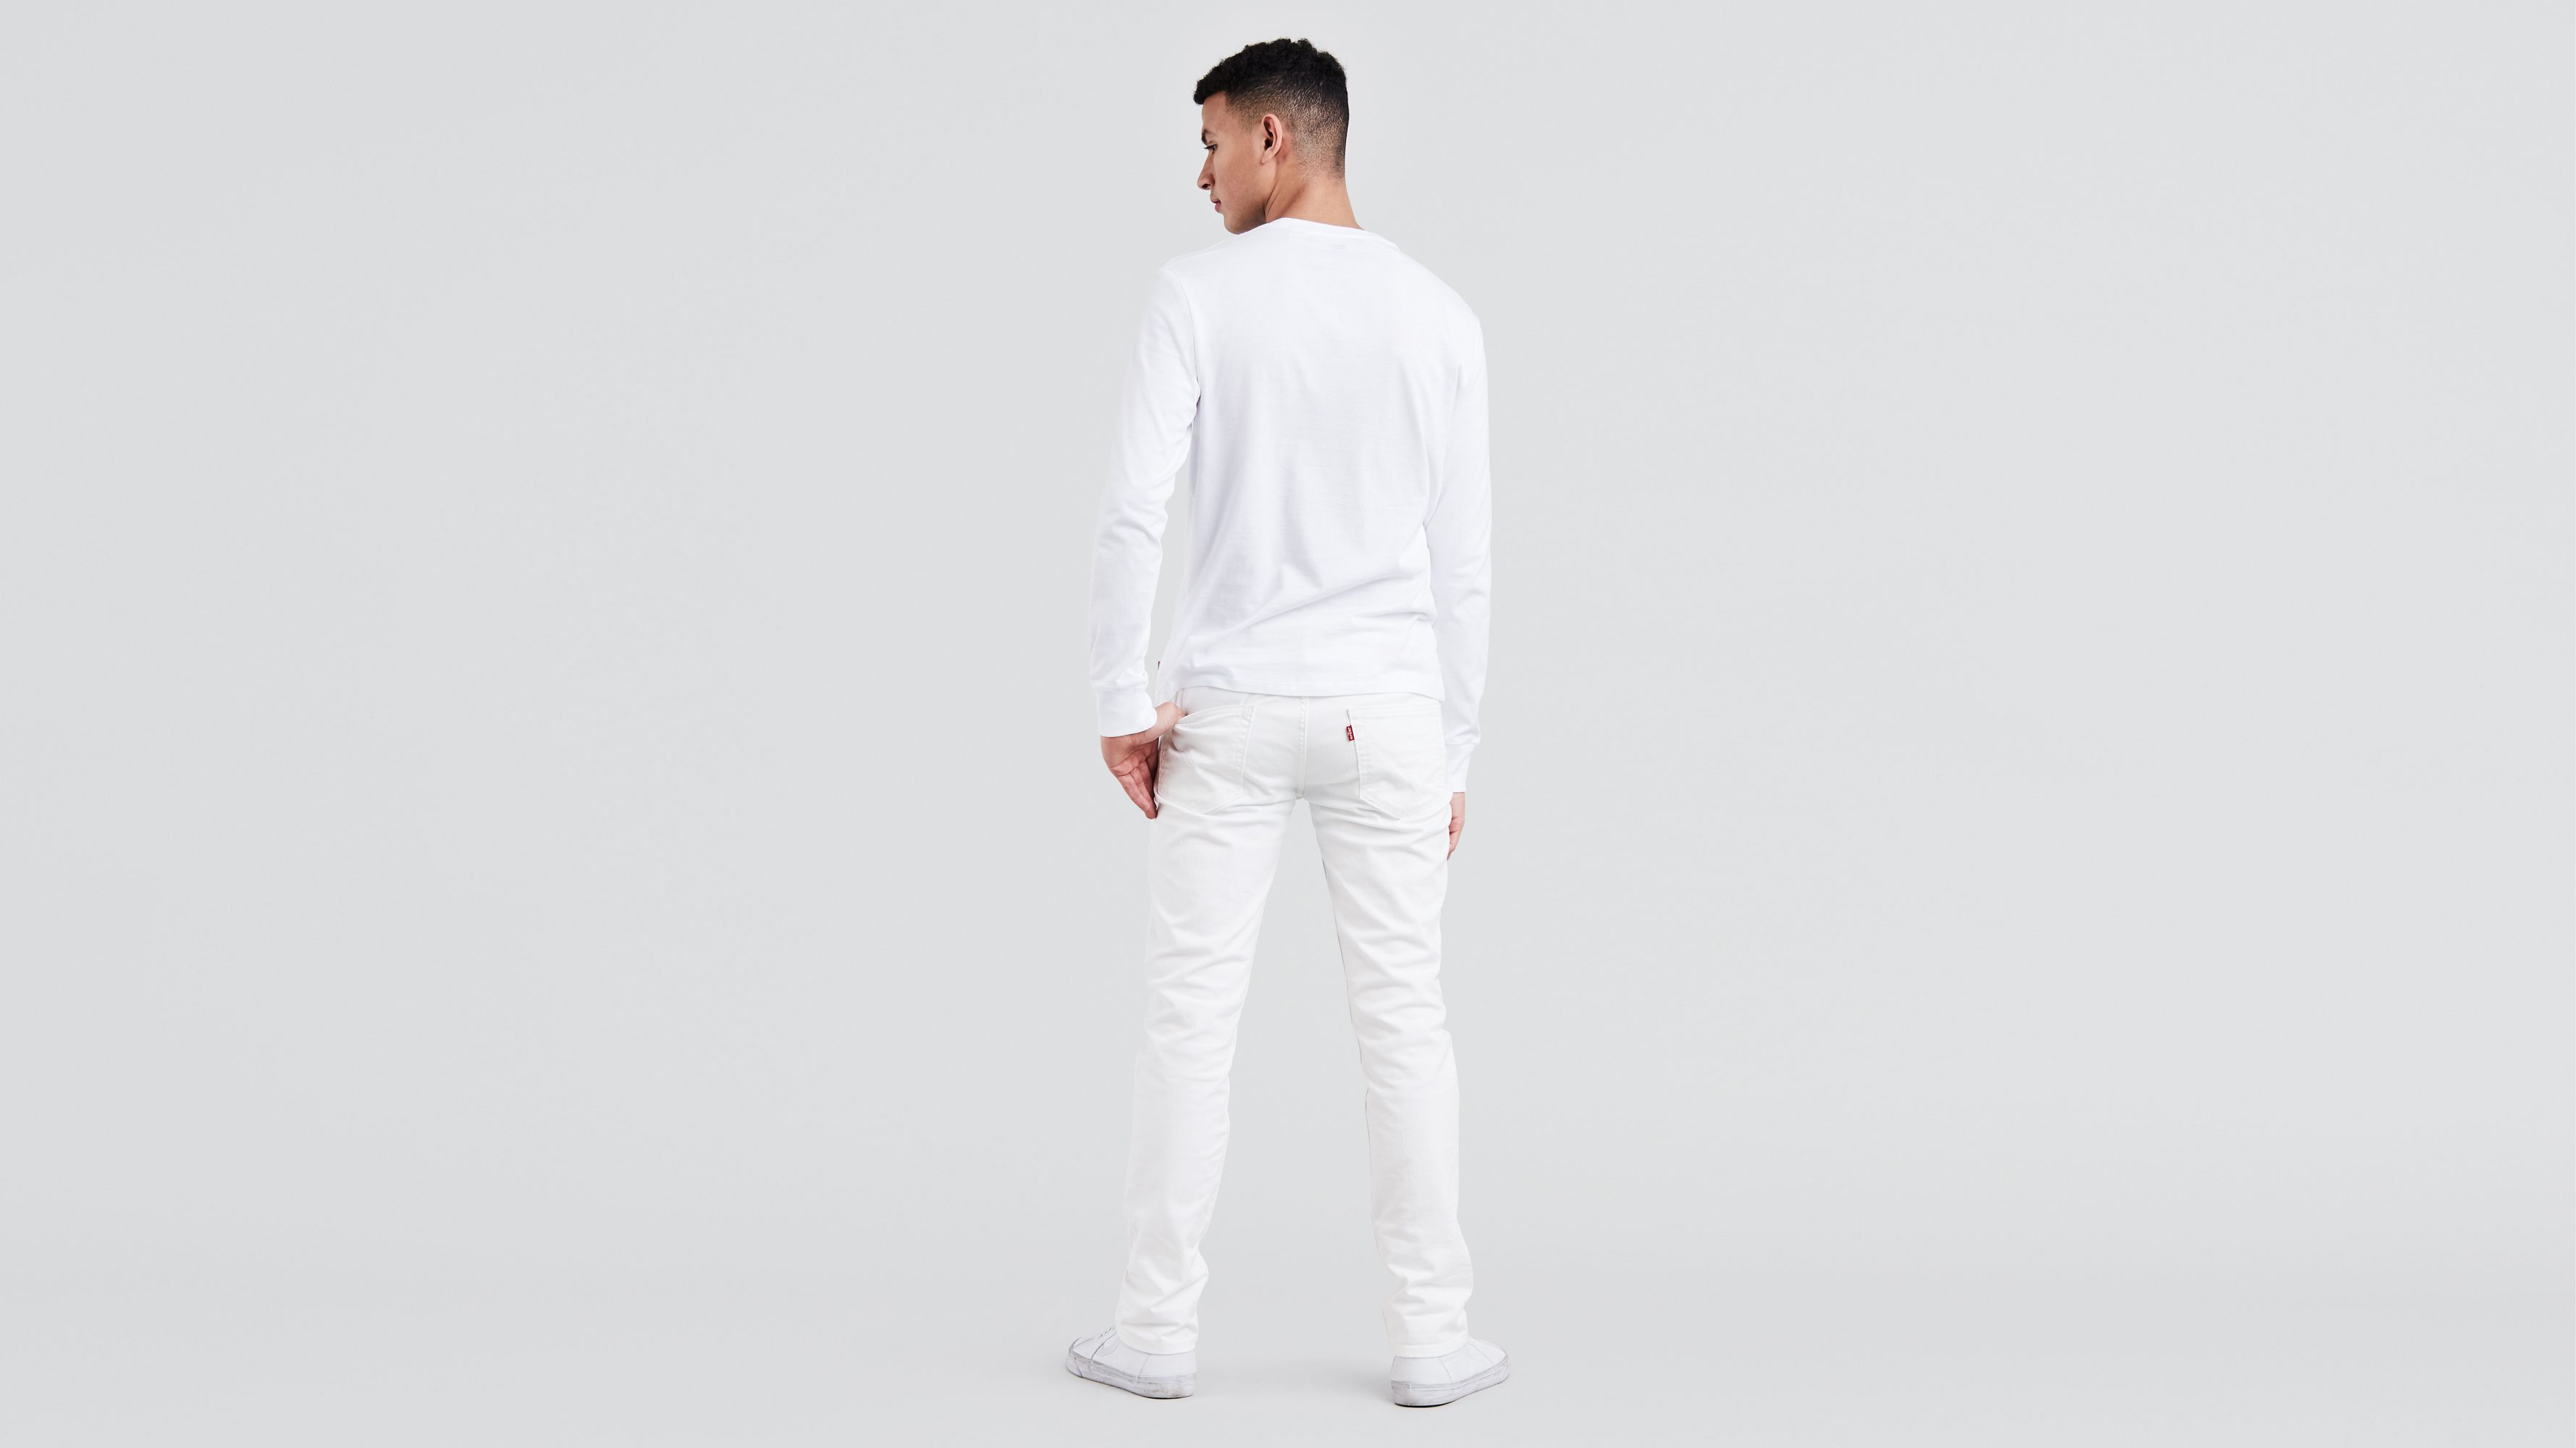 levi's 511 white jeans